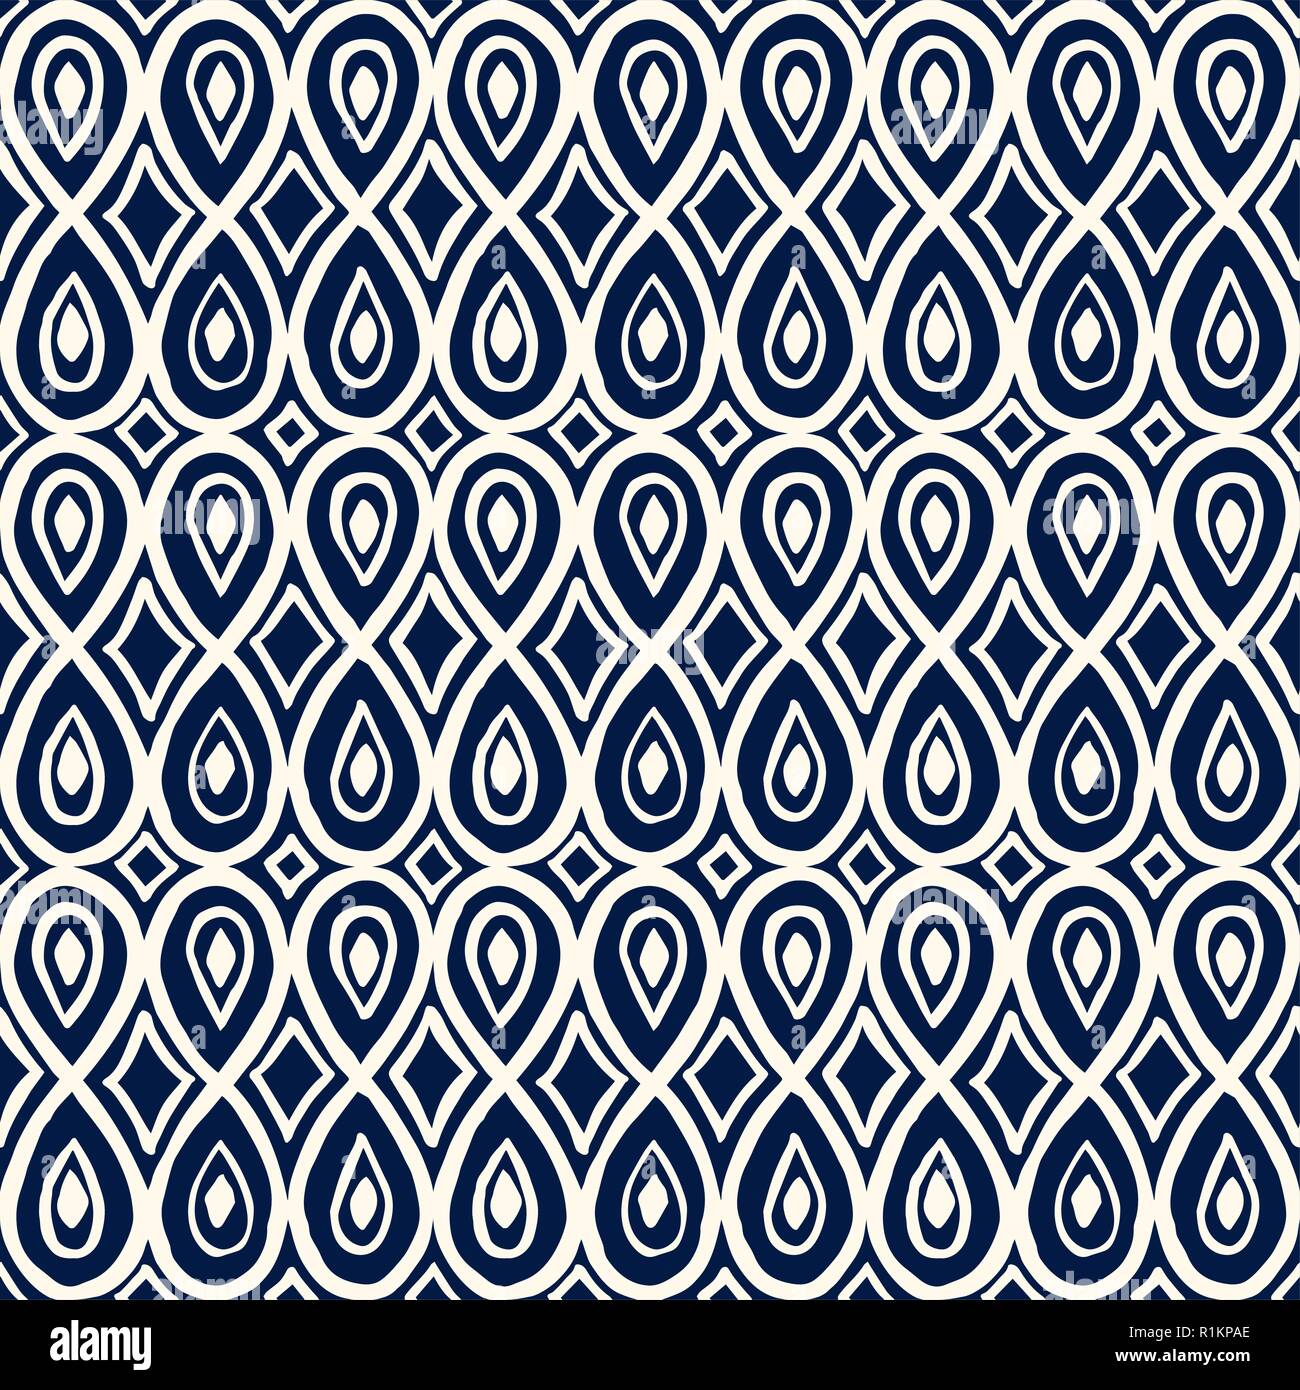 Indigo dye seamless ornament, ethnic batik motif with teardrop and rhomboid shapes. Ecru on blue background. Textile print. Stock Vector